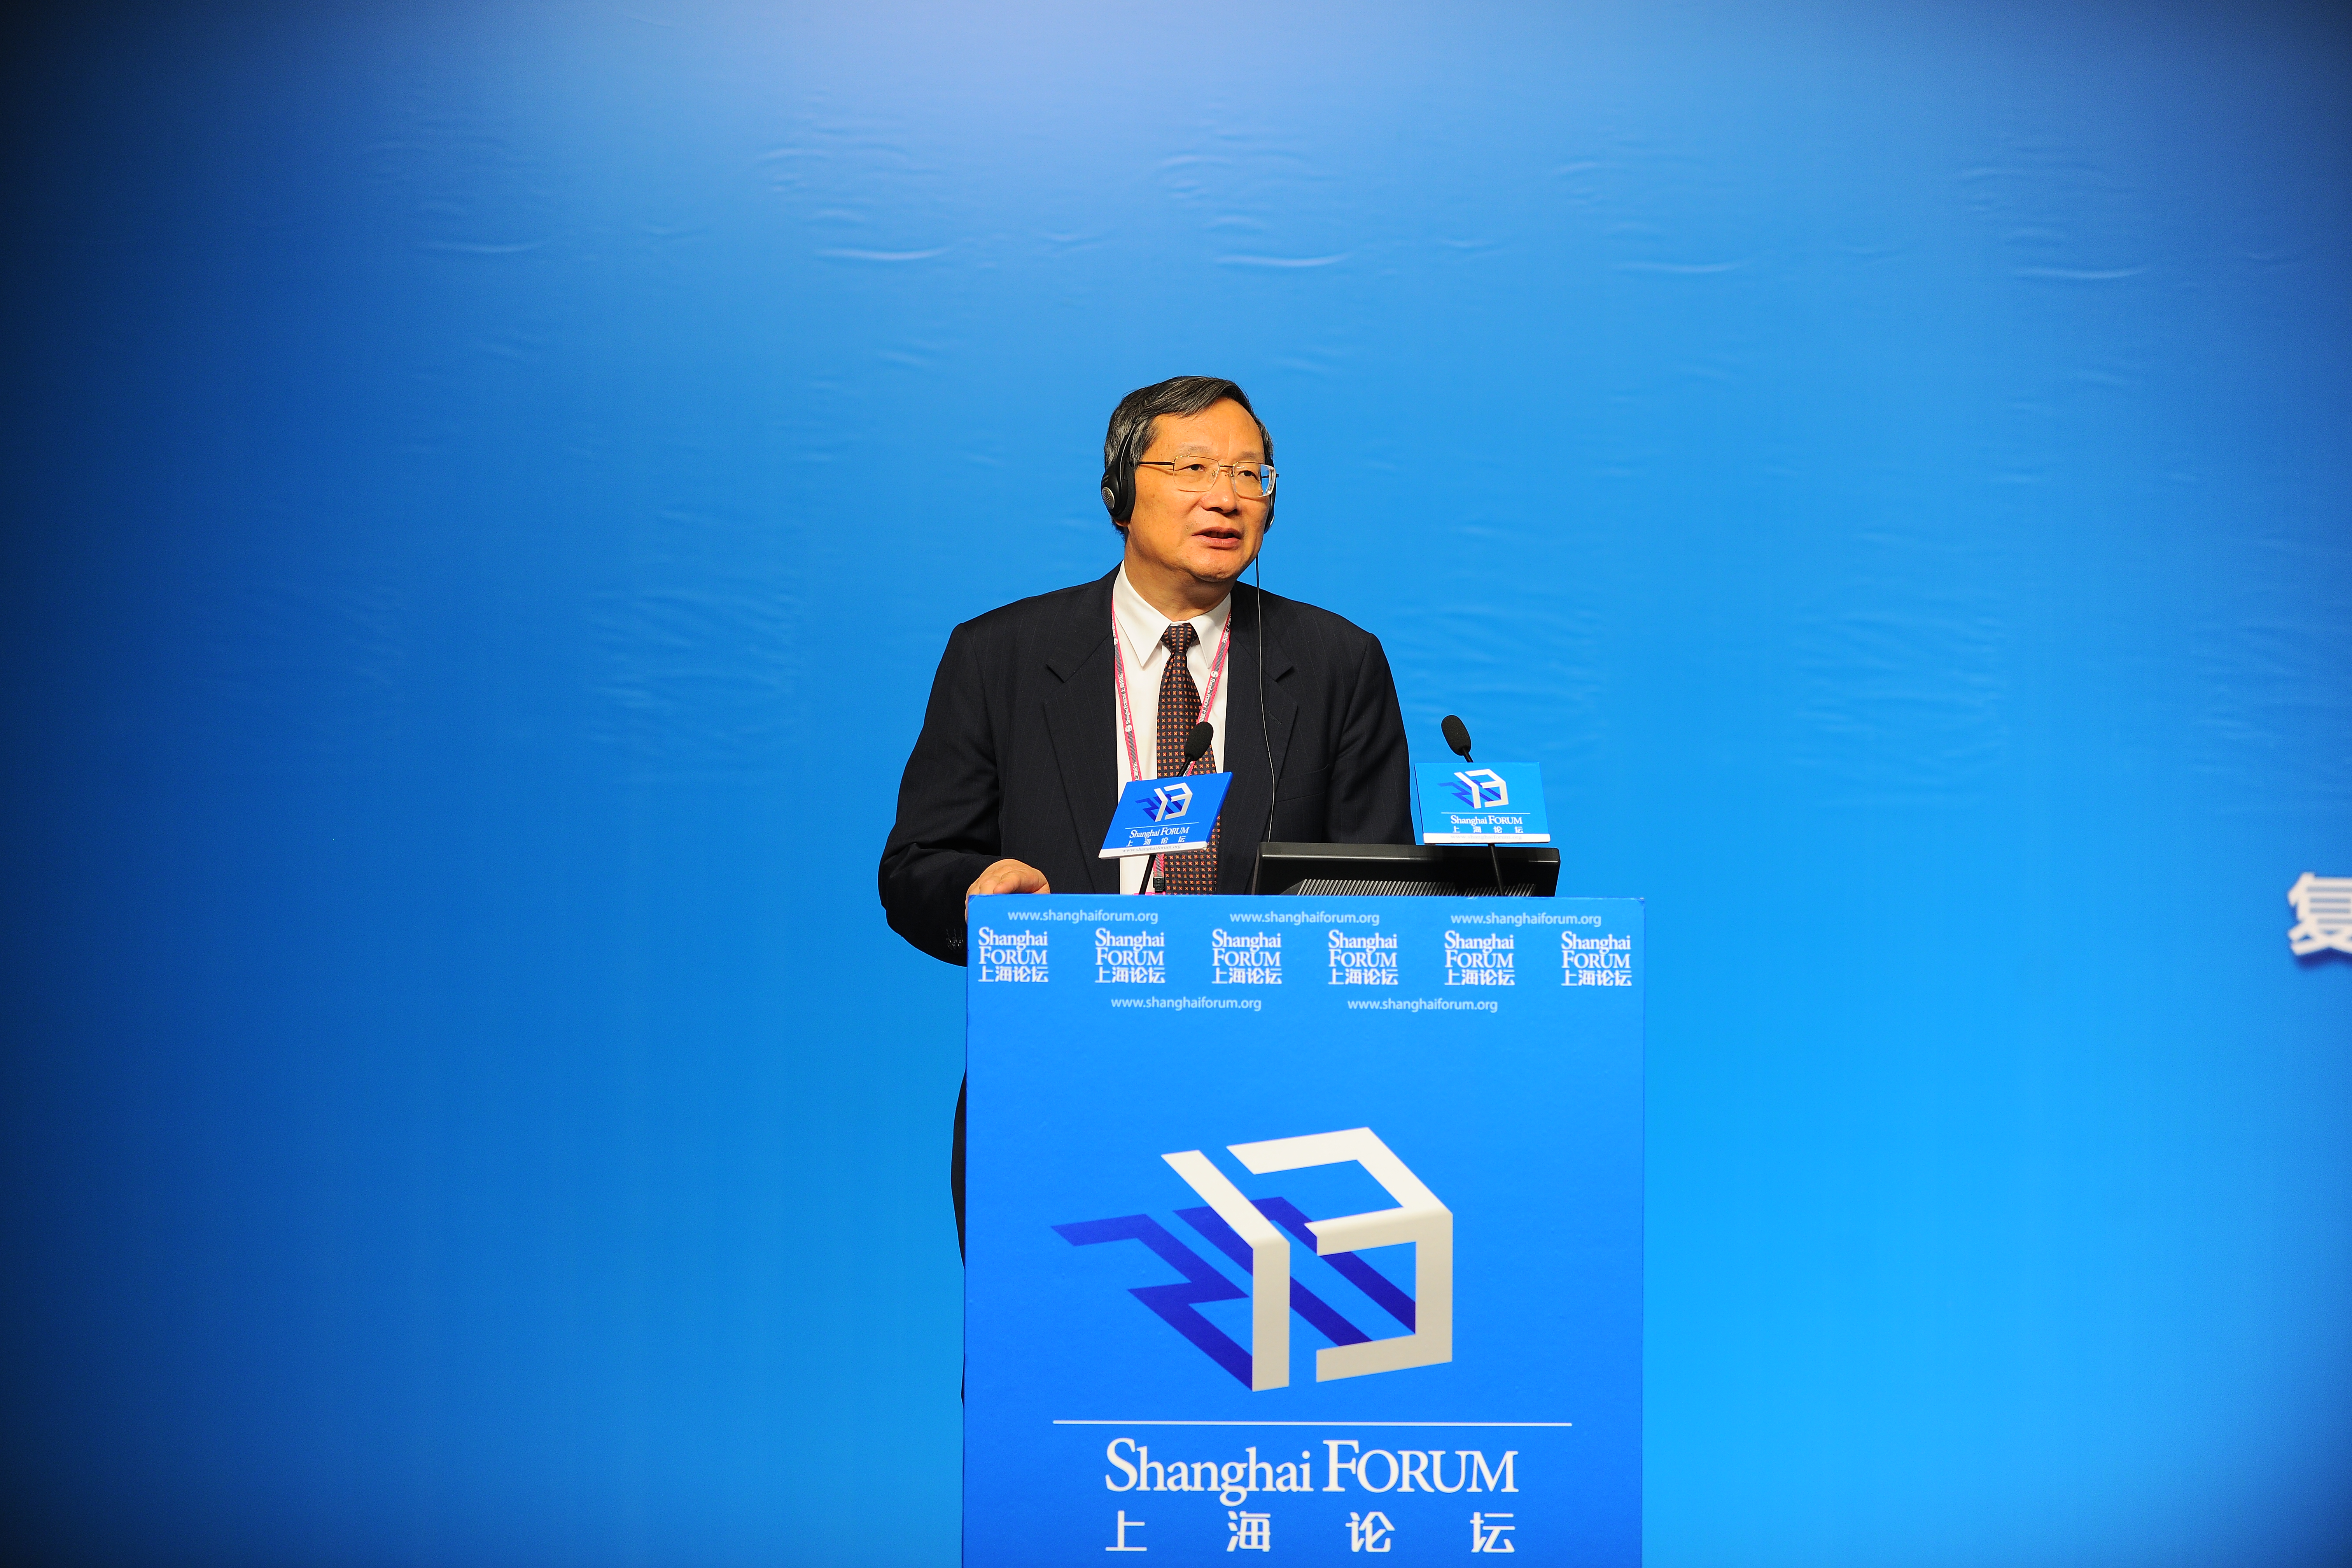 Fan Yongming (Opening Ceremony, Shanghai Forum 2013)